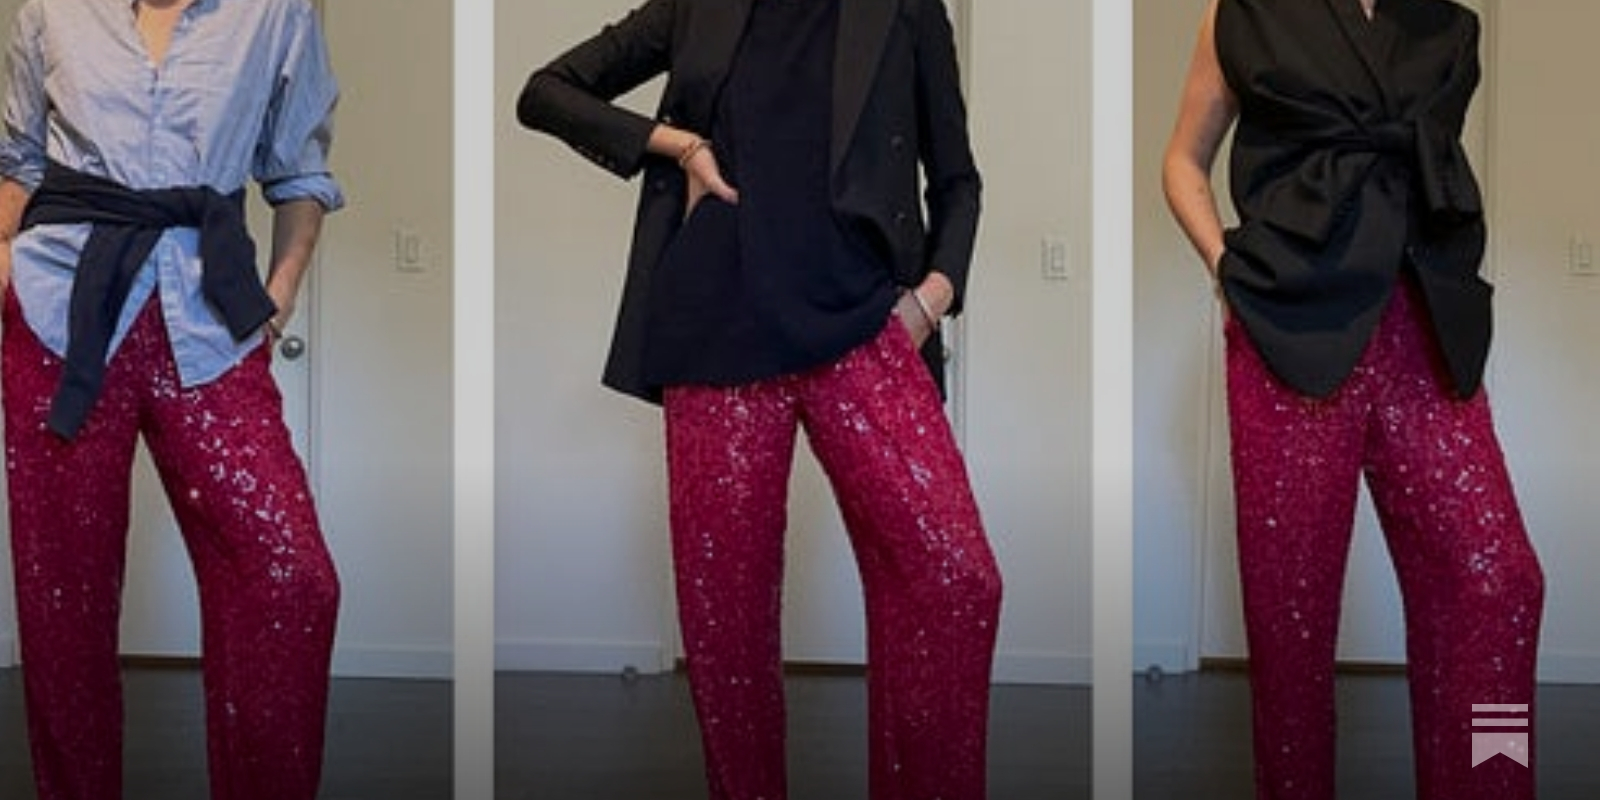 Funstigators - Ways to look like a pro ALWAYS: 1) Sparkle pants 2